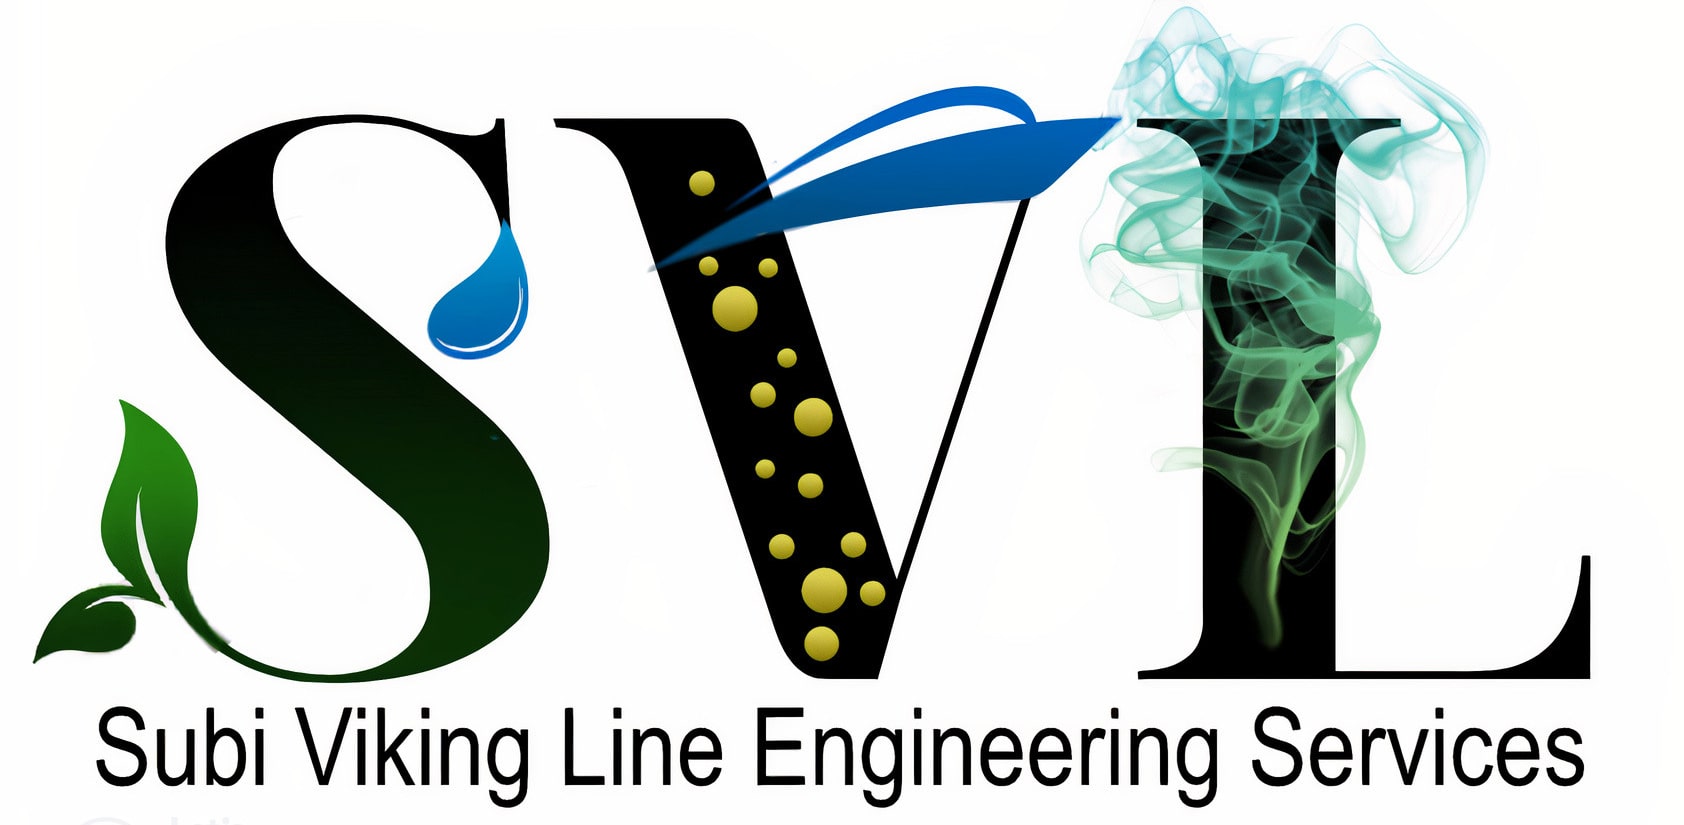 logo svl, logo subi viking line engineering services in Australia